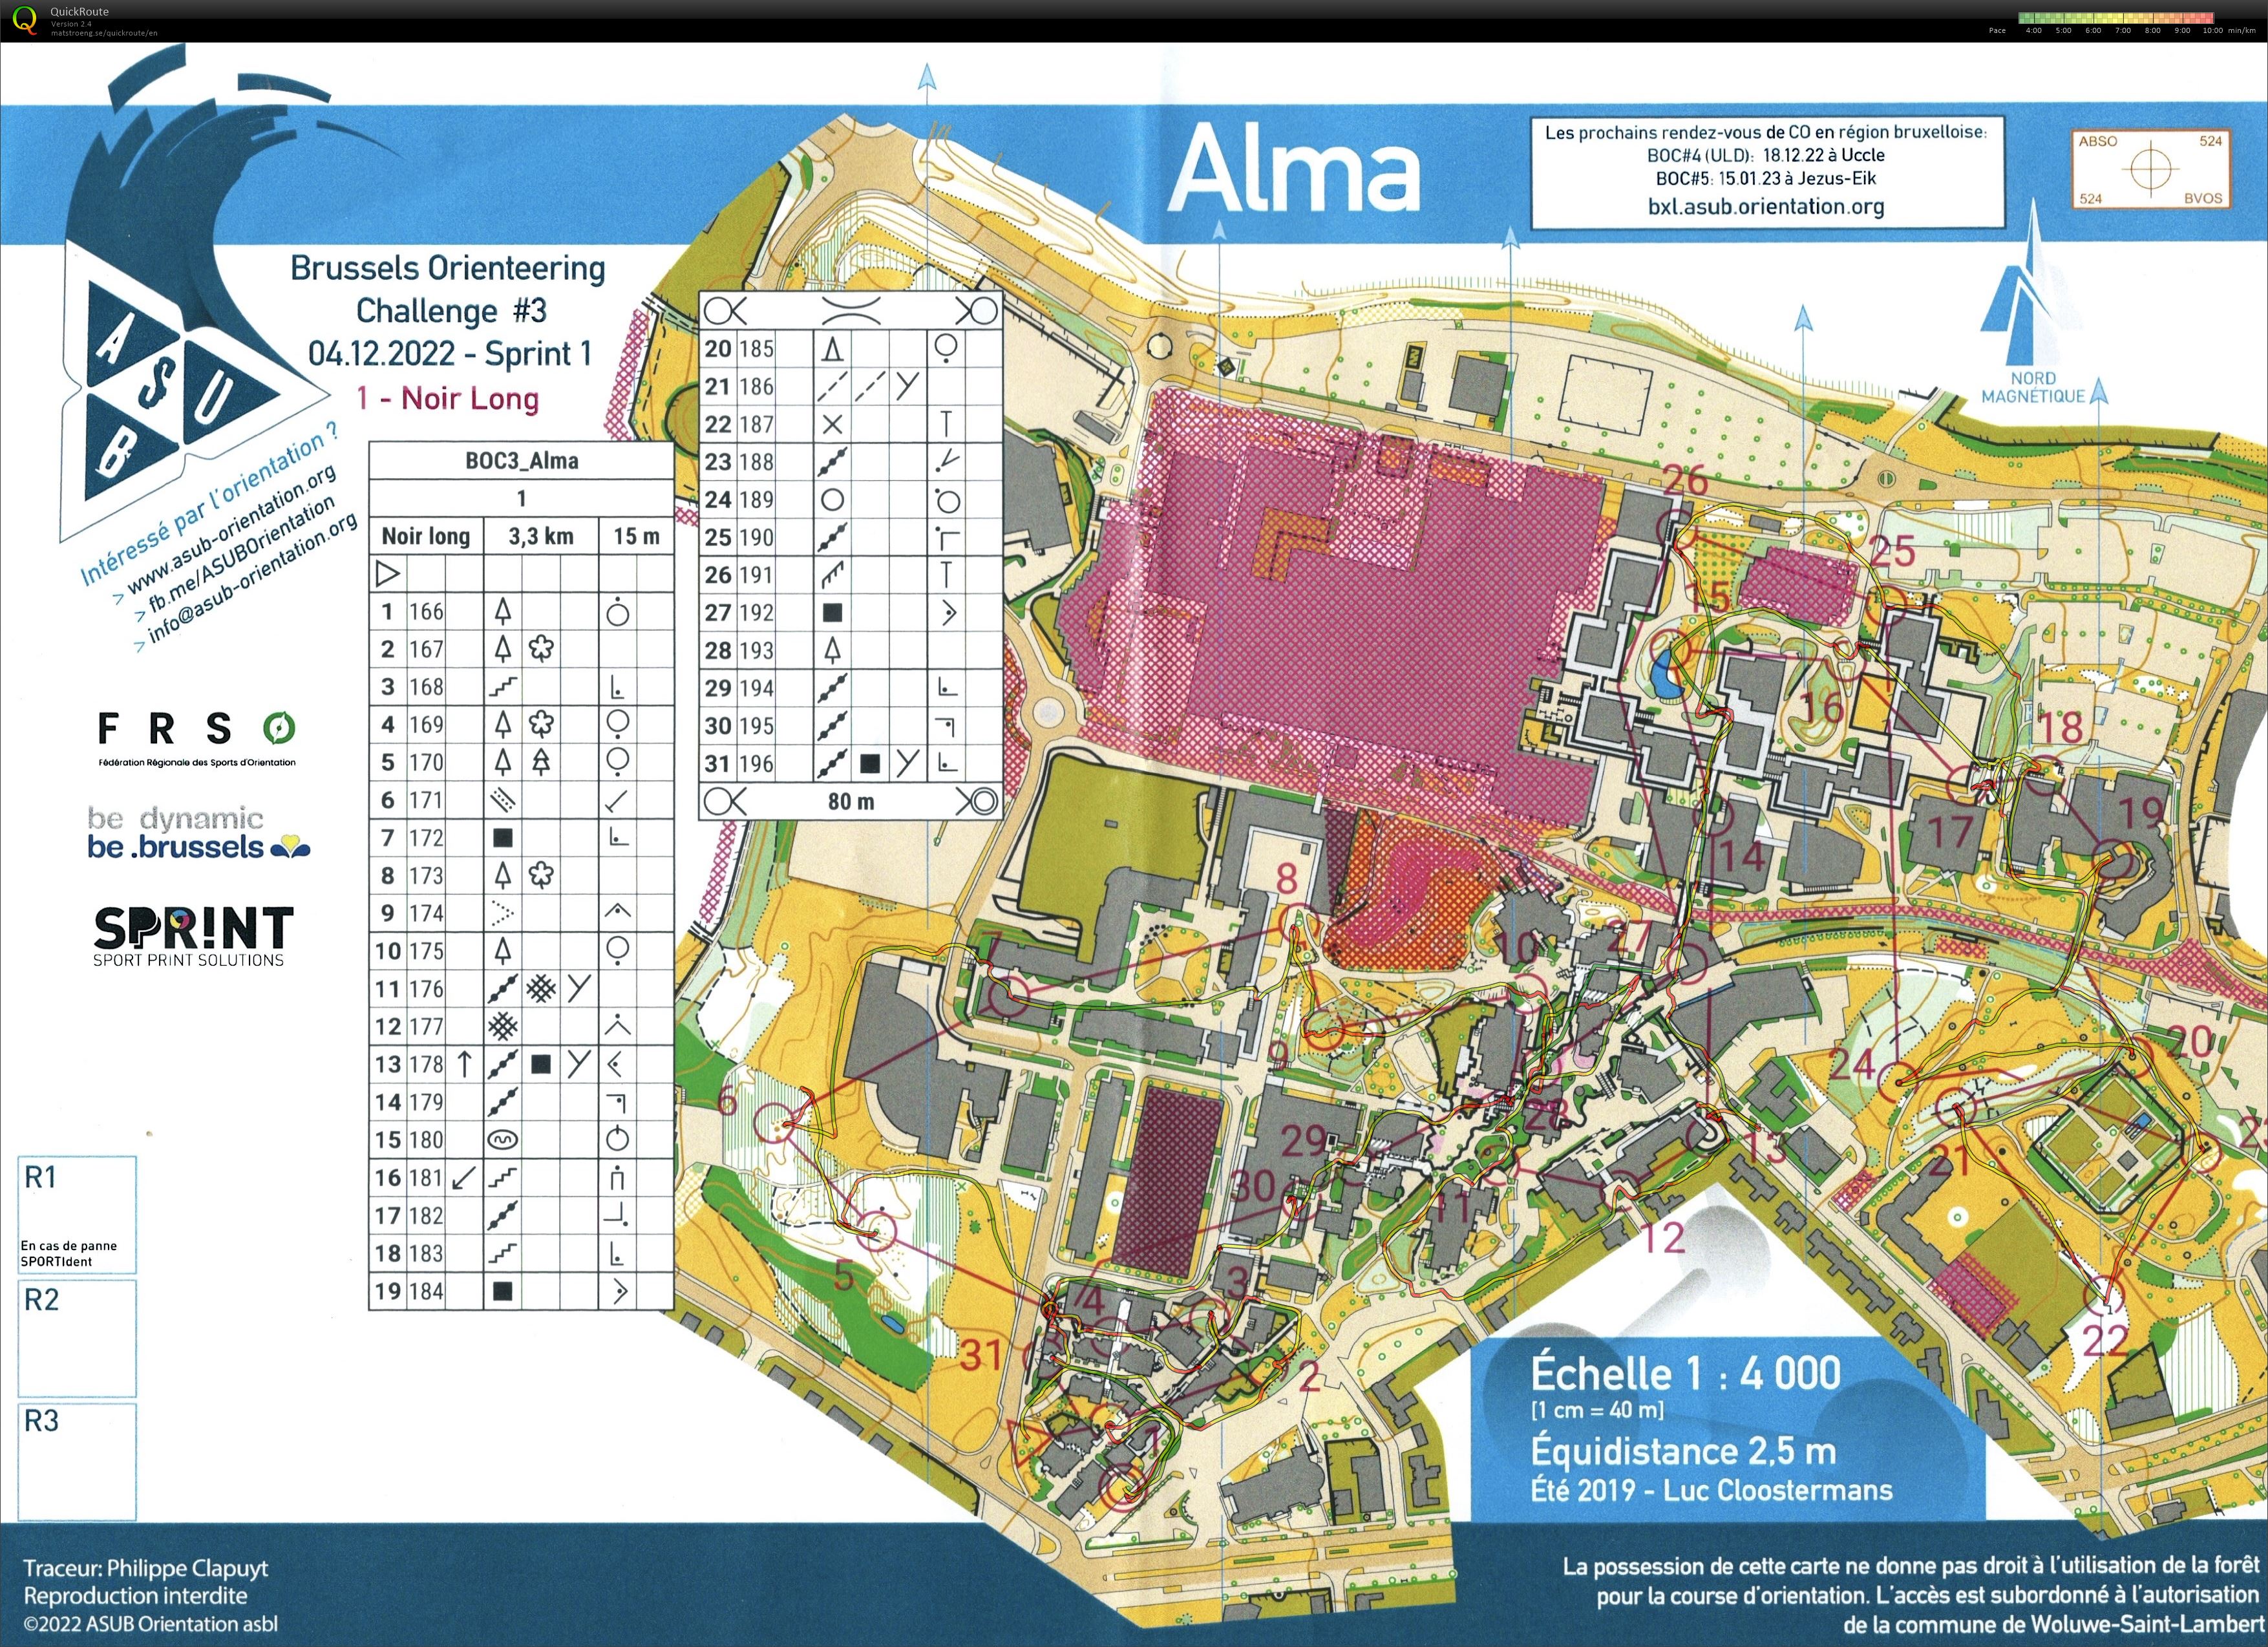 Brussels Orienteering Challenge #3 - Sprint 1 - Alma (04.12.2022)